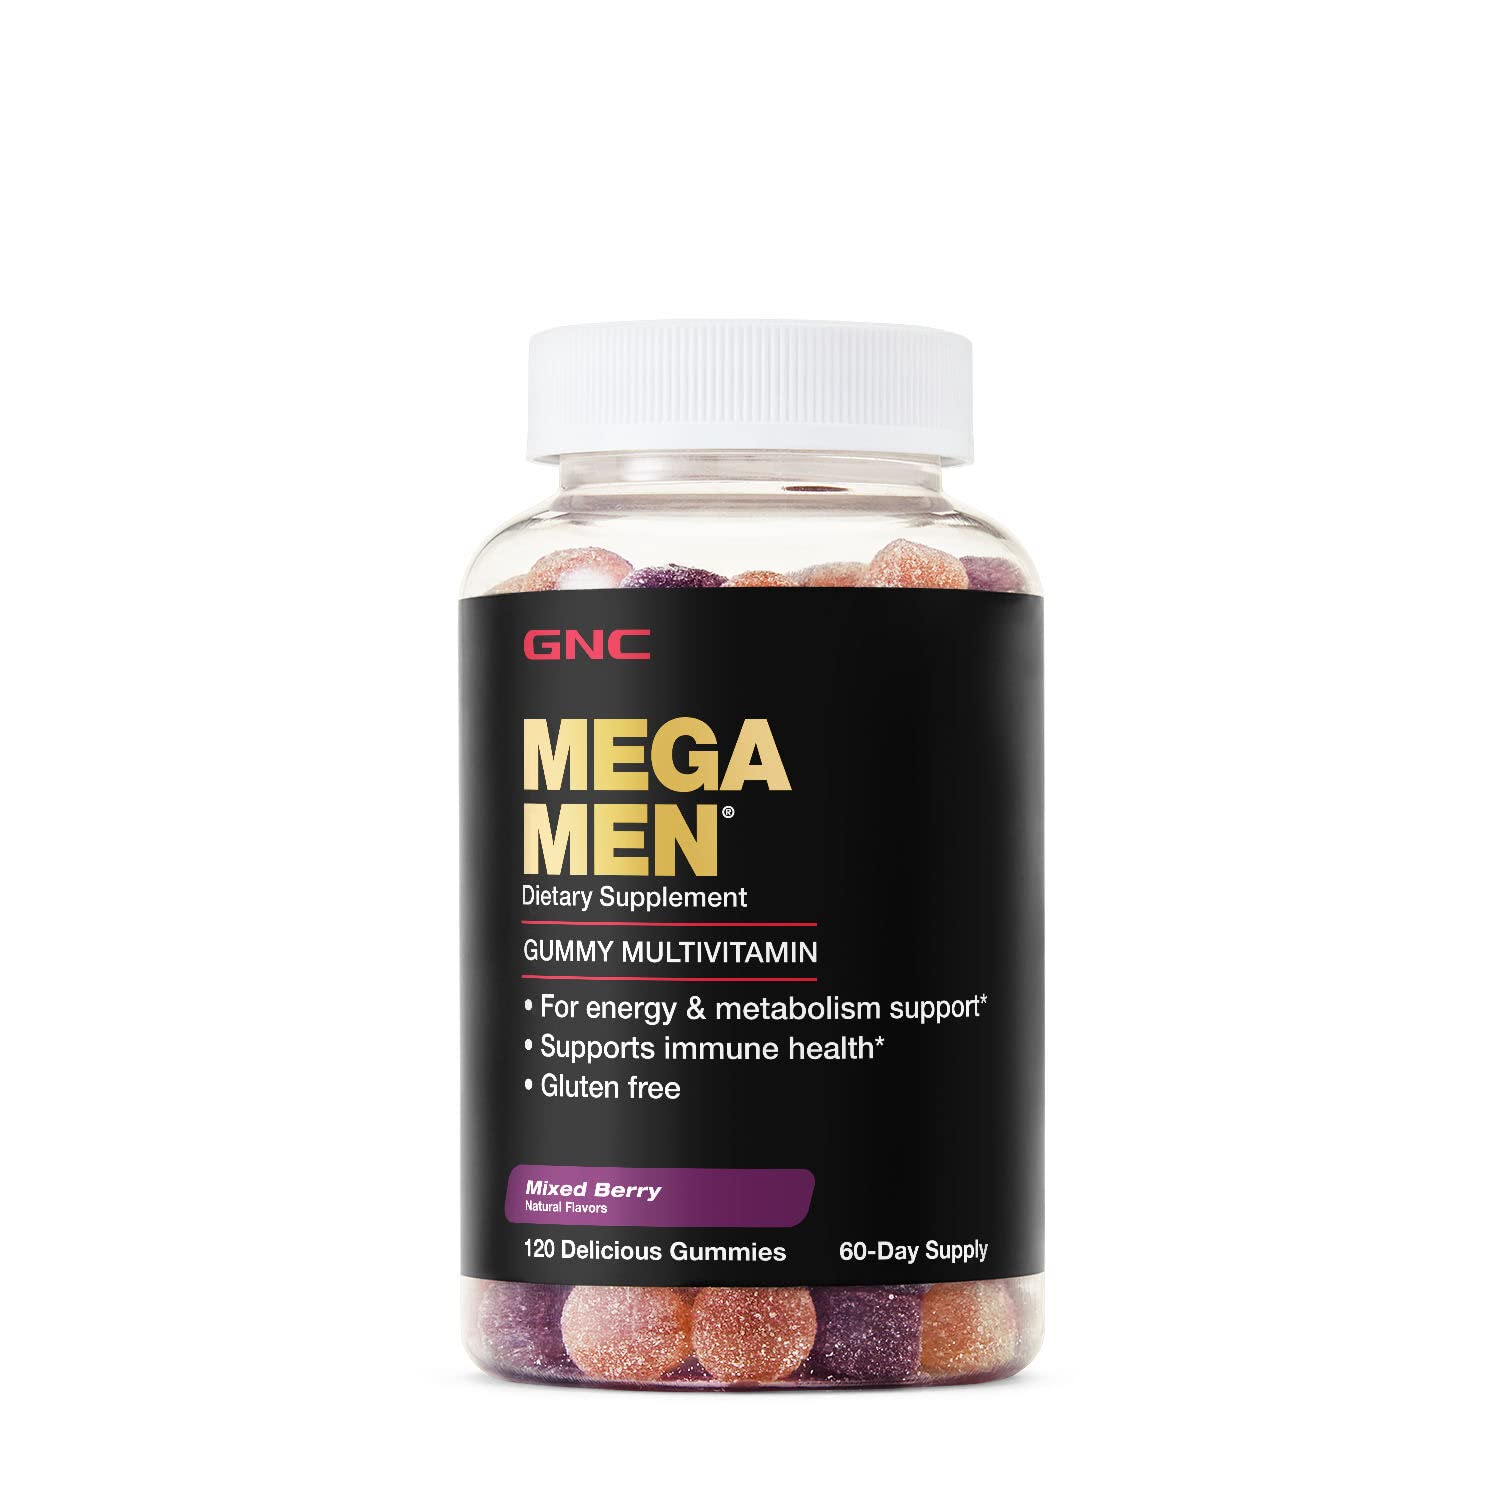 GNC Mega Men Gummy Multivitamin | Supports Energy, Metabolism, and Immune System, Gluten Free | Mixe